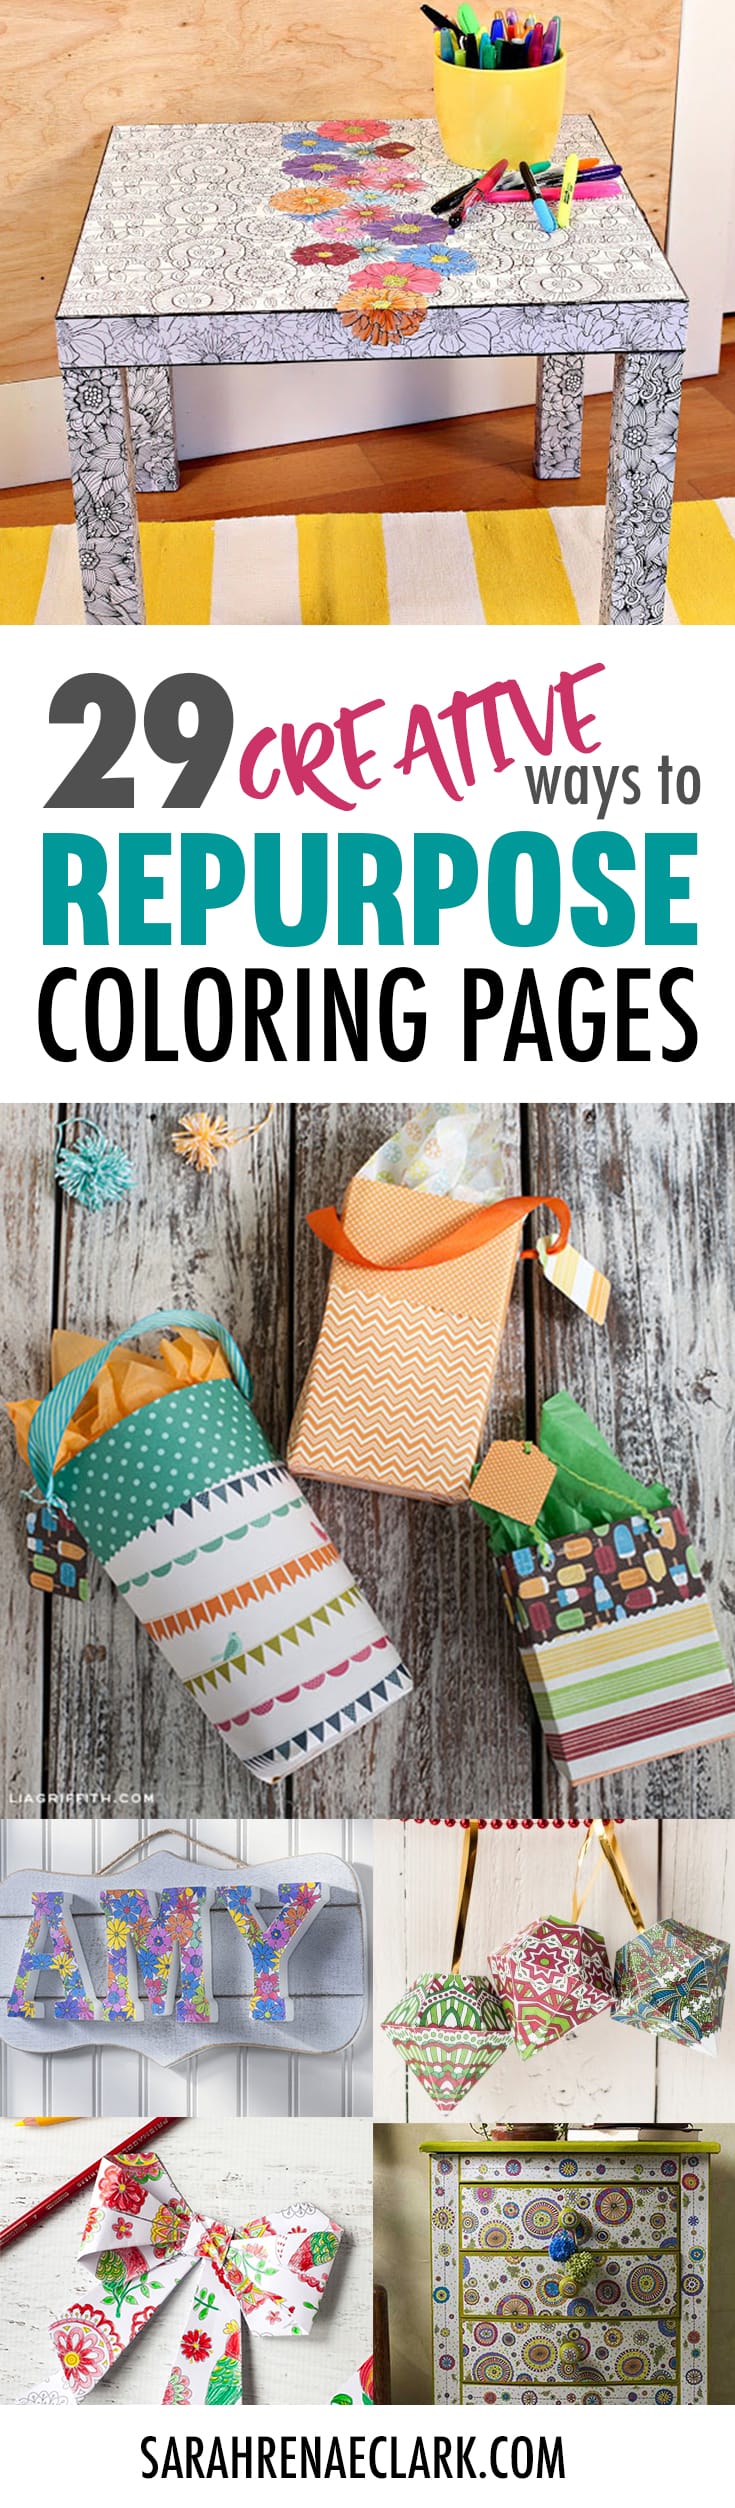 29 Creative Ways to Repurpose Coloring Pages Sarah Renae